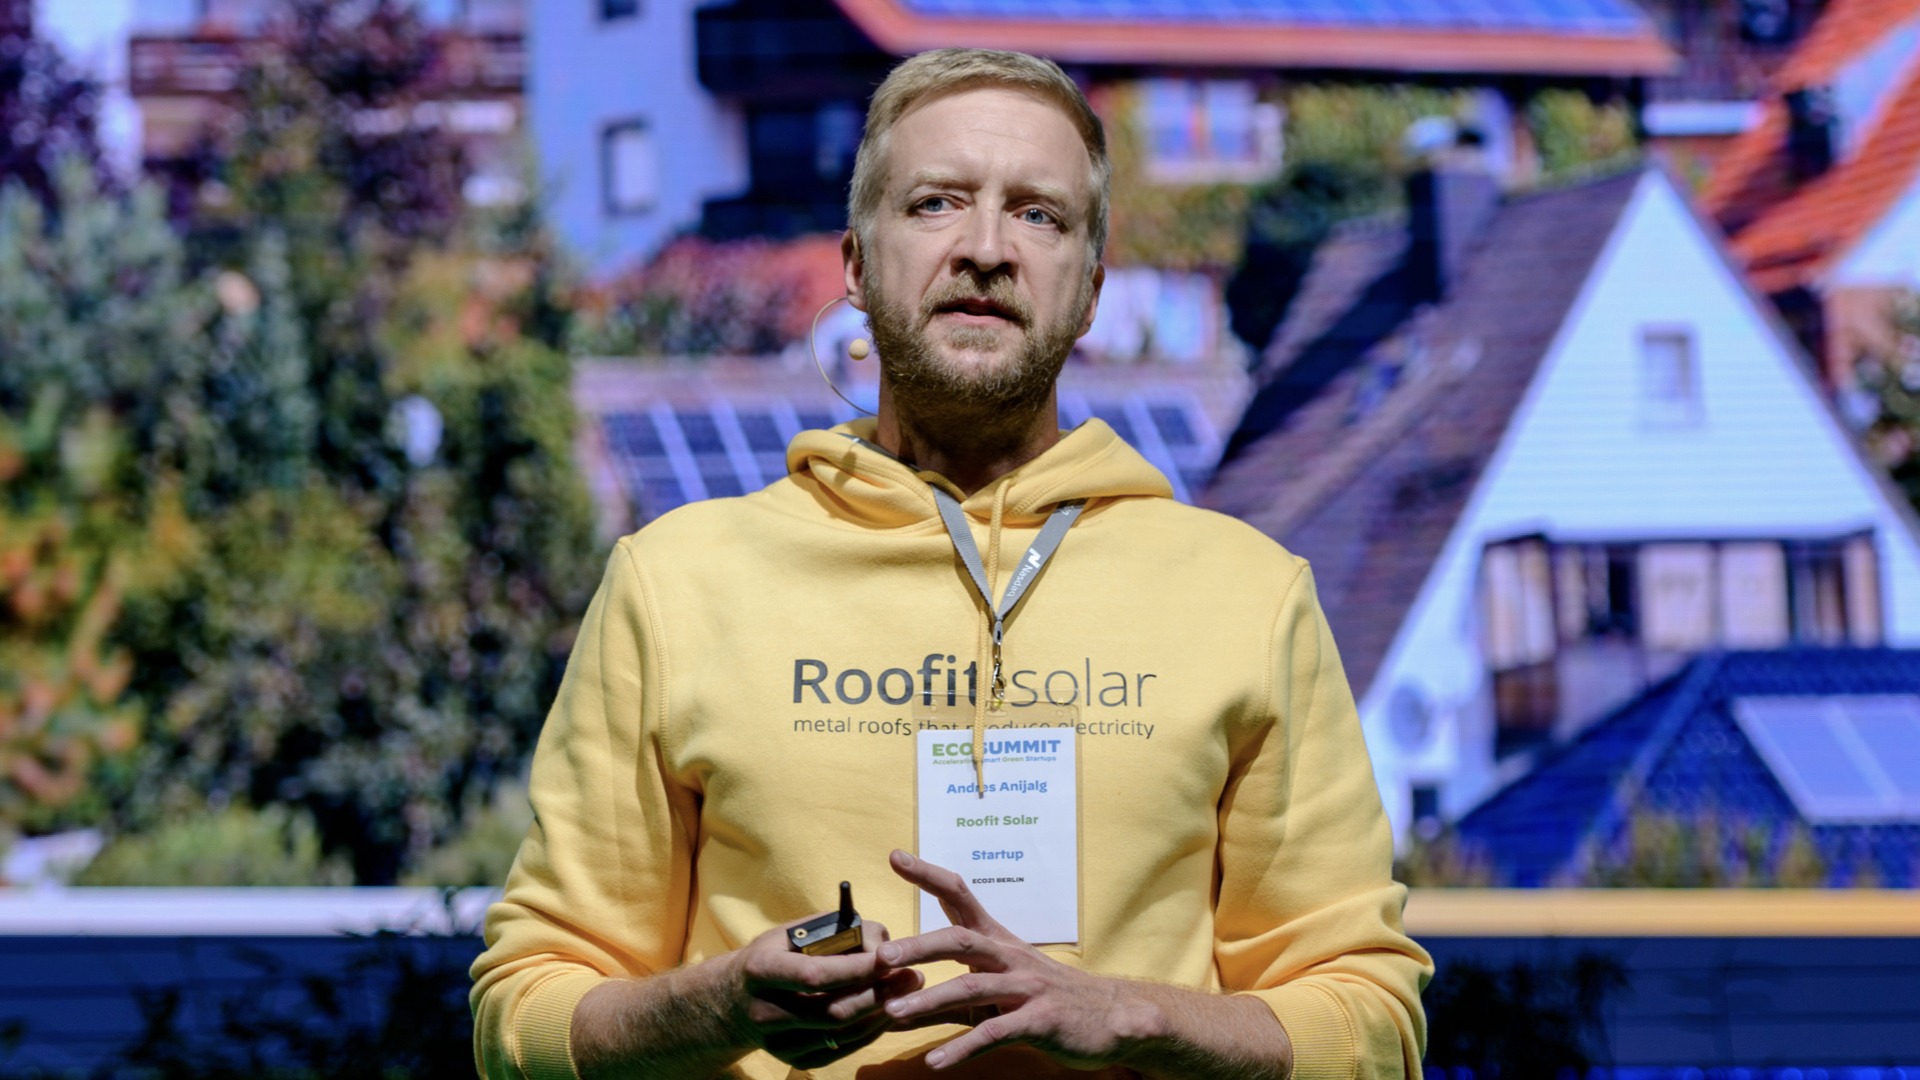 Andres Anijalg Roofit Solar